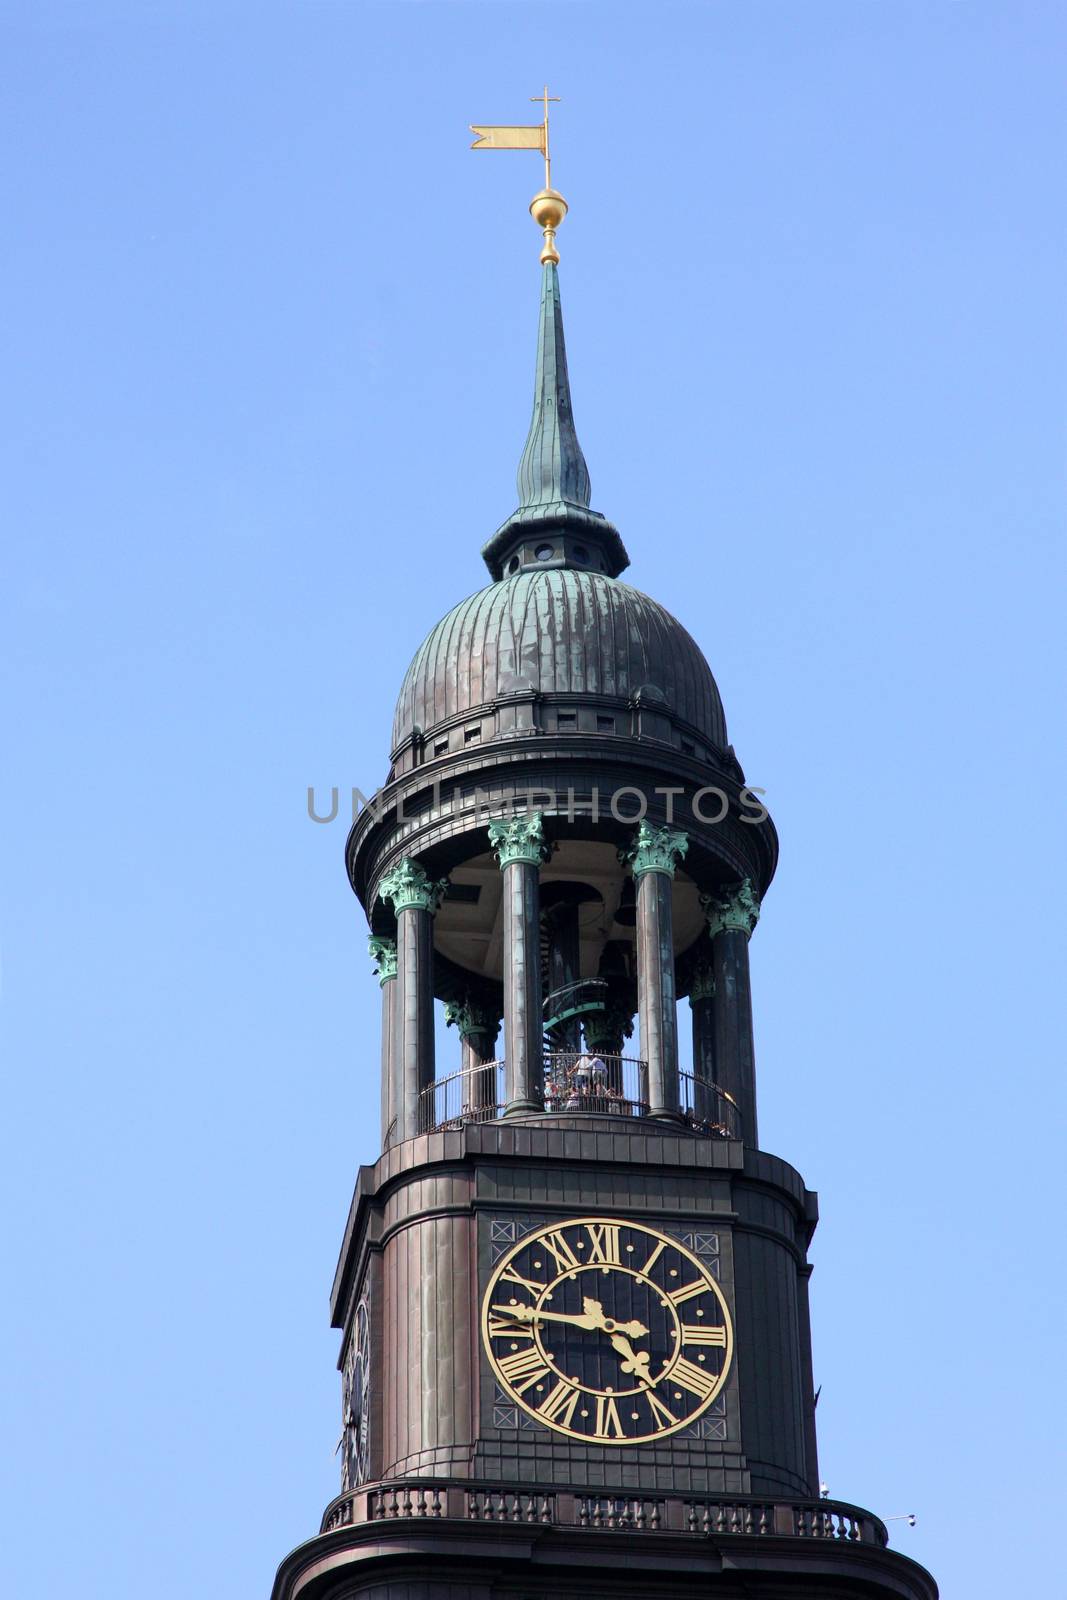  St. Michael's Church (Sankt Michaelis) in Hamburg, Germany